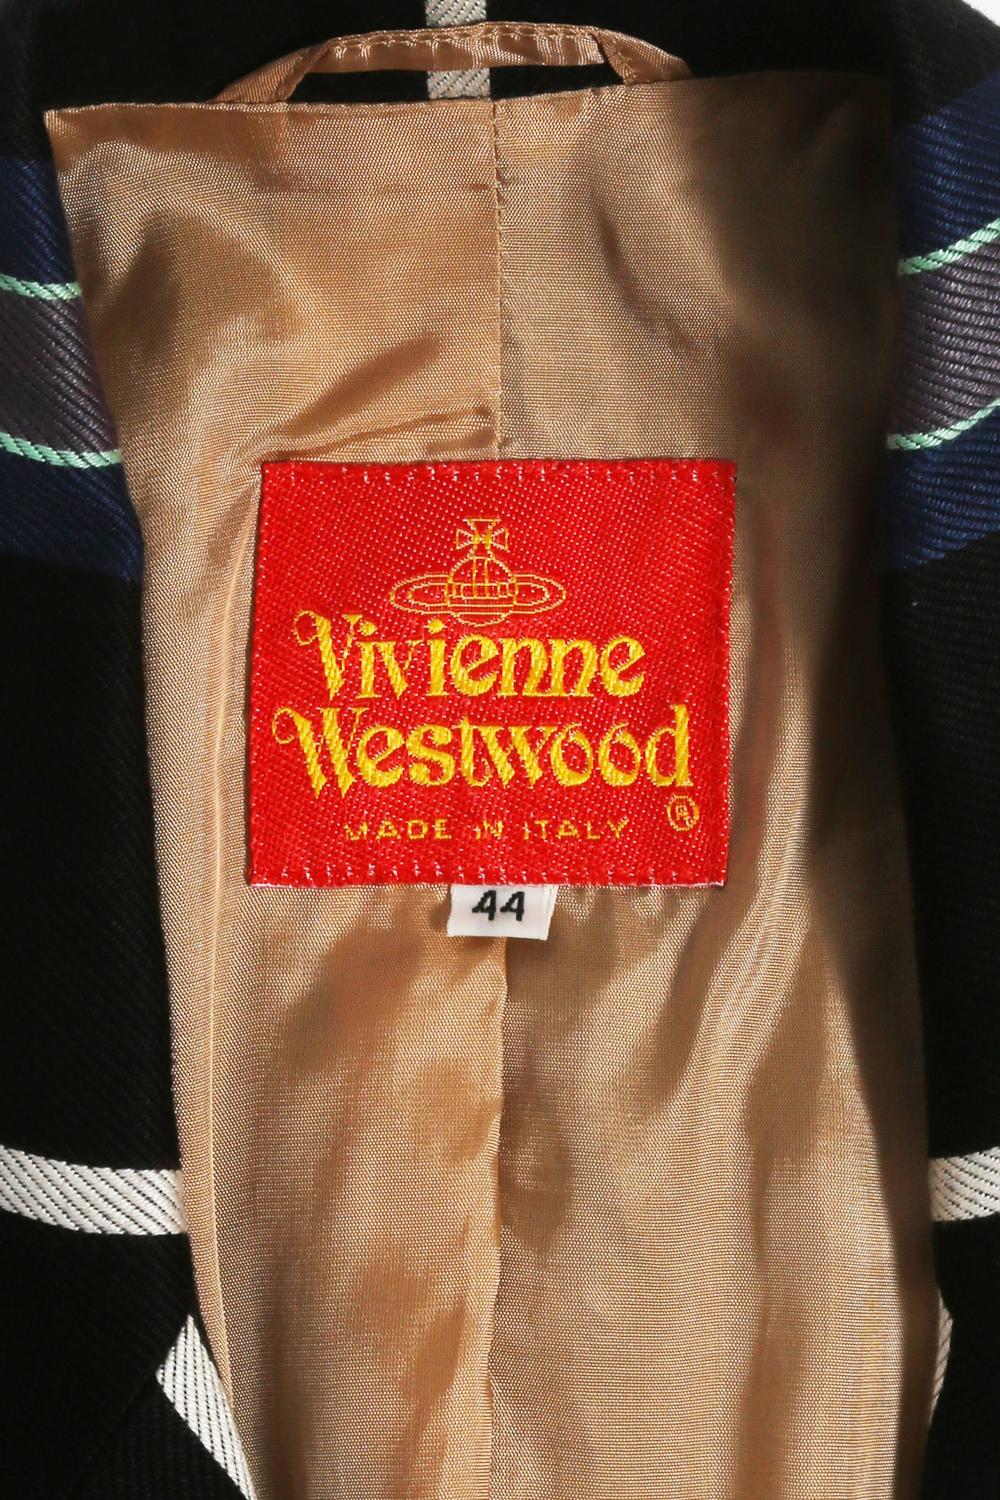 Vivienne Westwood tweed striped skirt suit, circa 1995 For Sale at 1stdibs